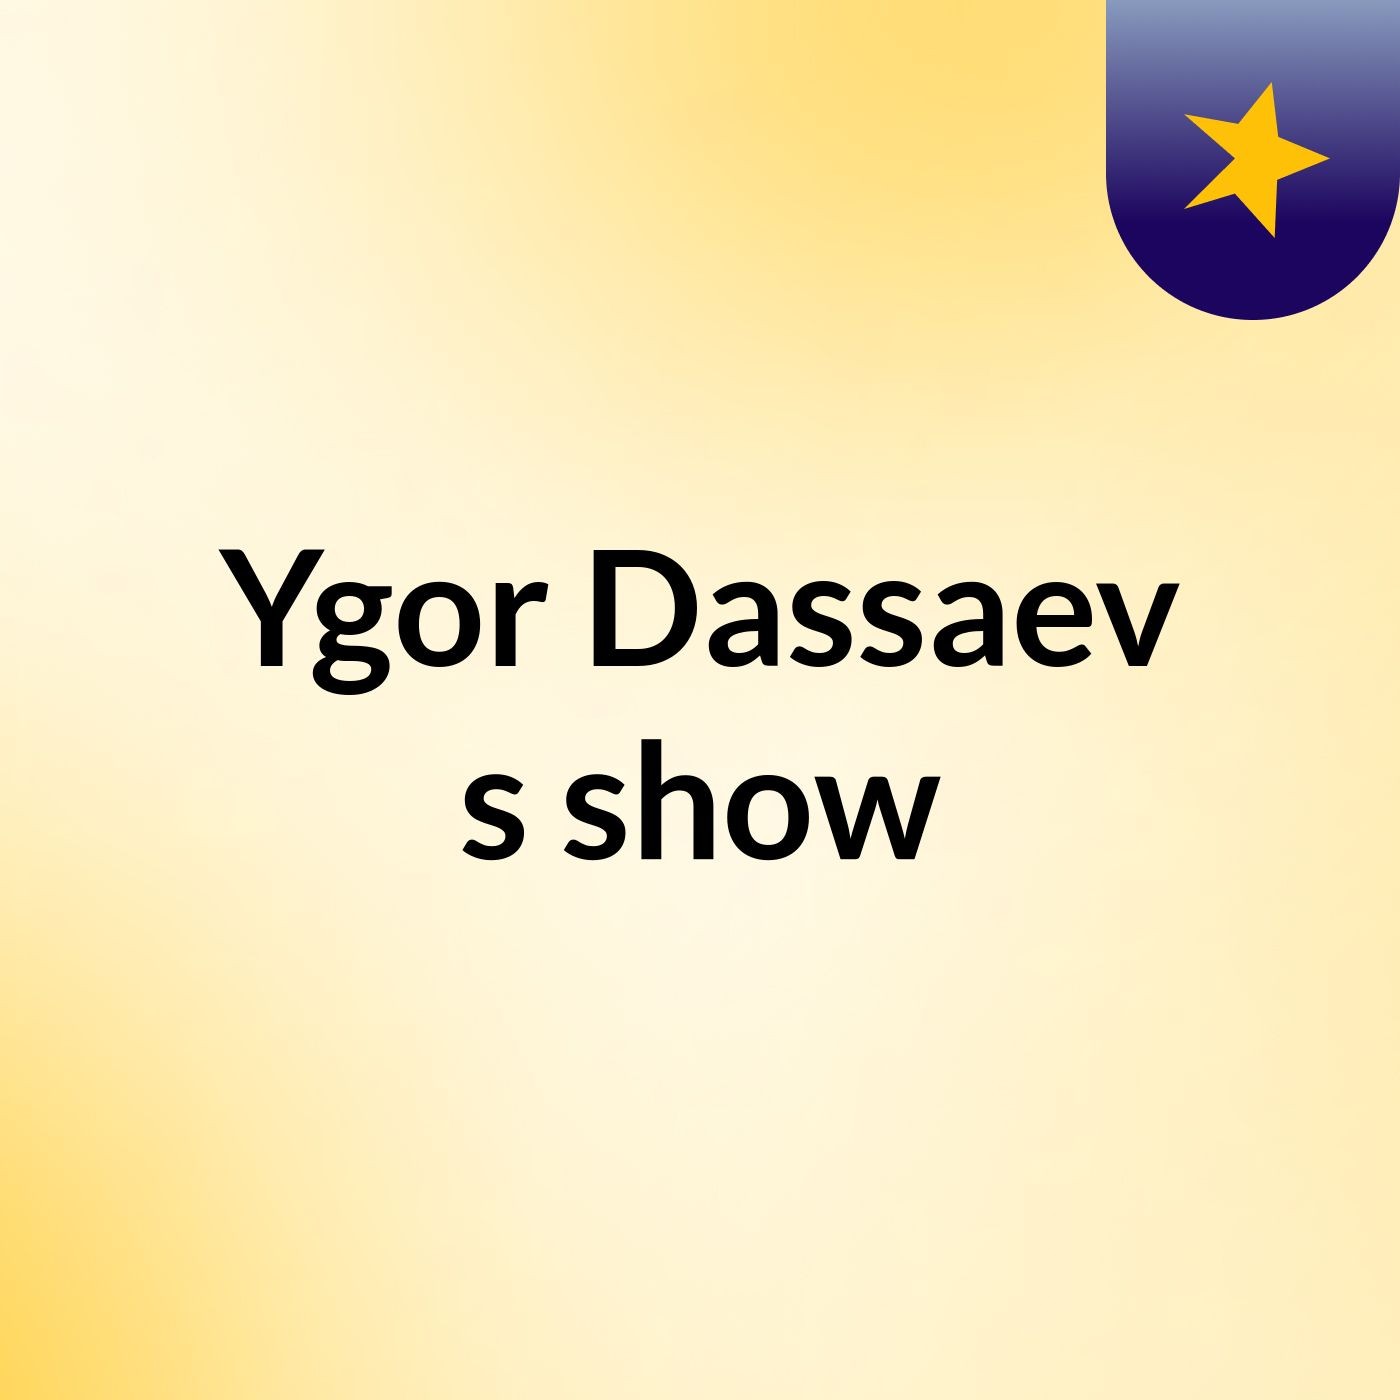 Ygor Dassaev's show